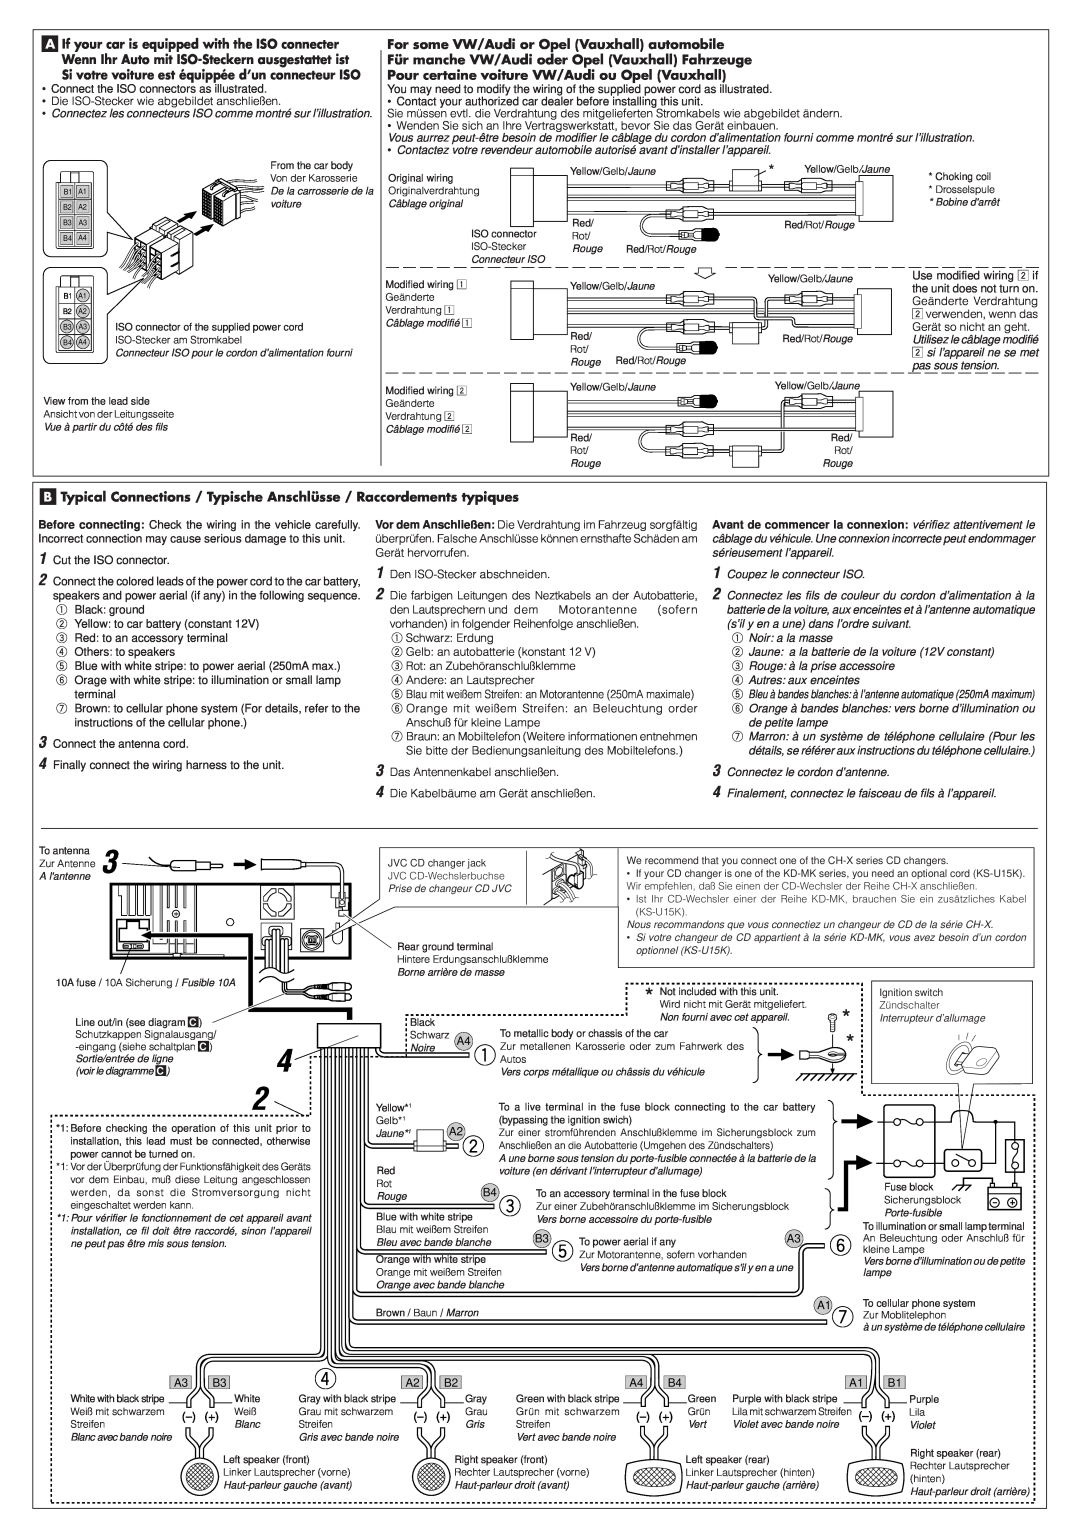 JVC KD-MX3000R manual For some VW/Audi or Opel Vauxhall automobile, Für manche VW/Audi oder Opel Vauxhall Fahrzeuge 